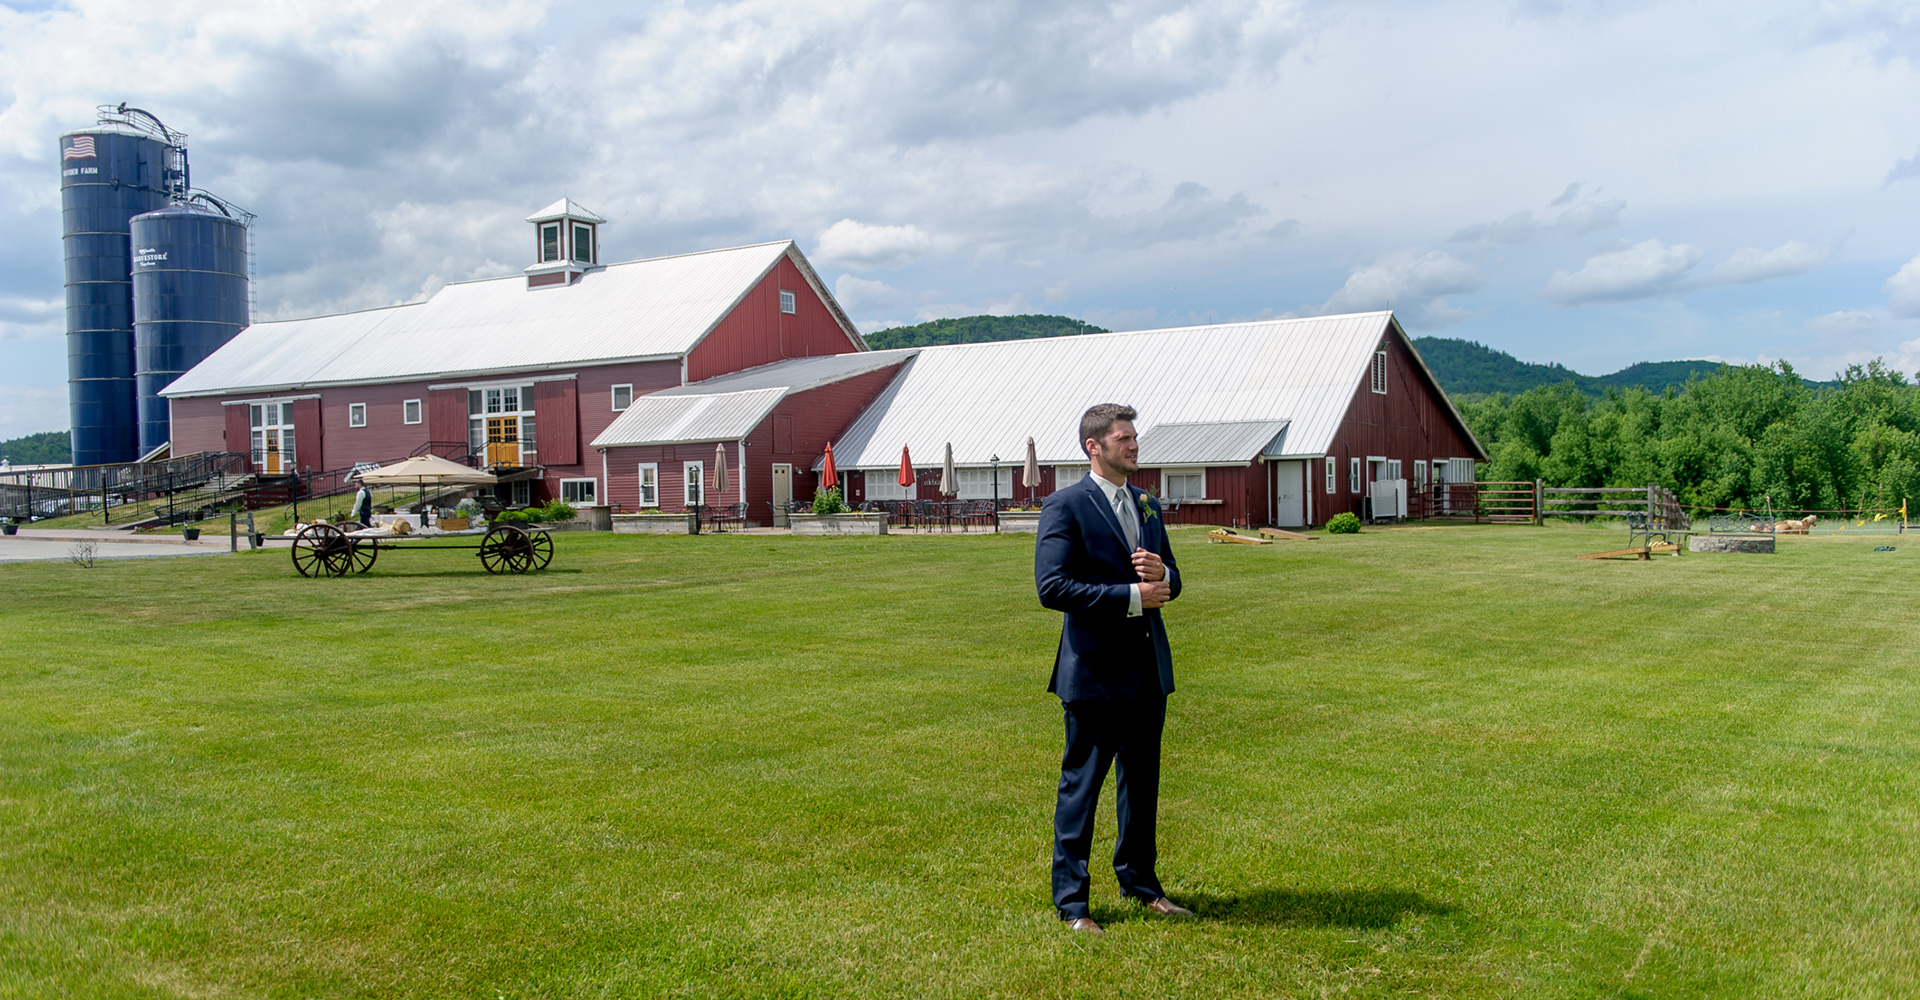 The Barn At Boyden Farm The Vermont Wedding Of Your Dreams